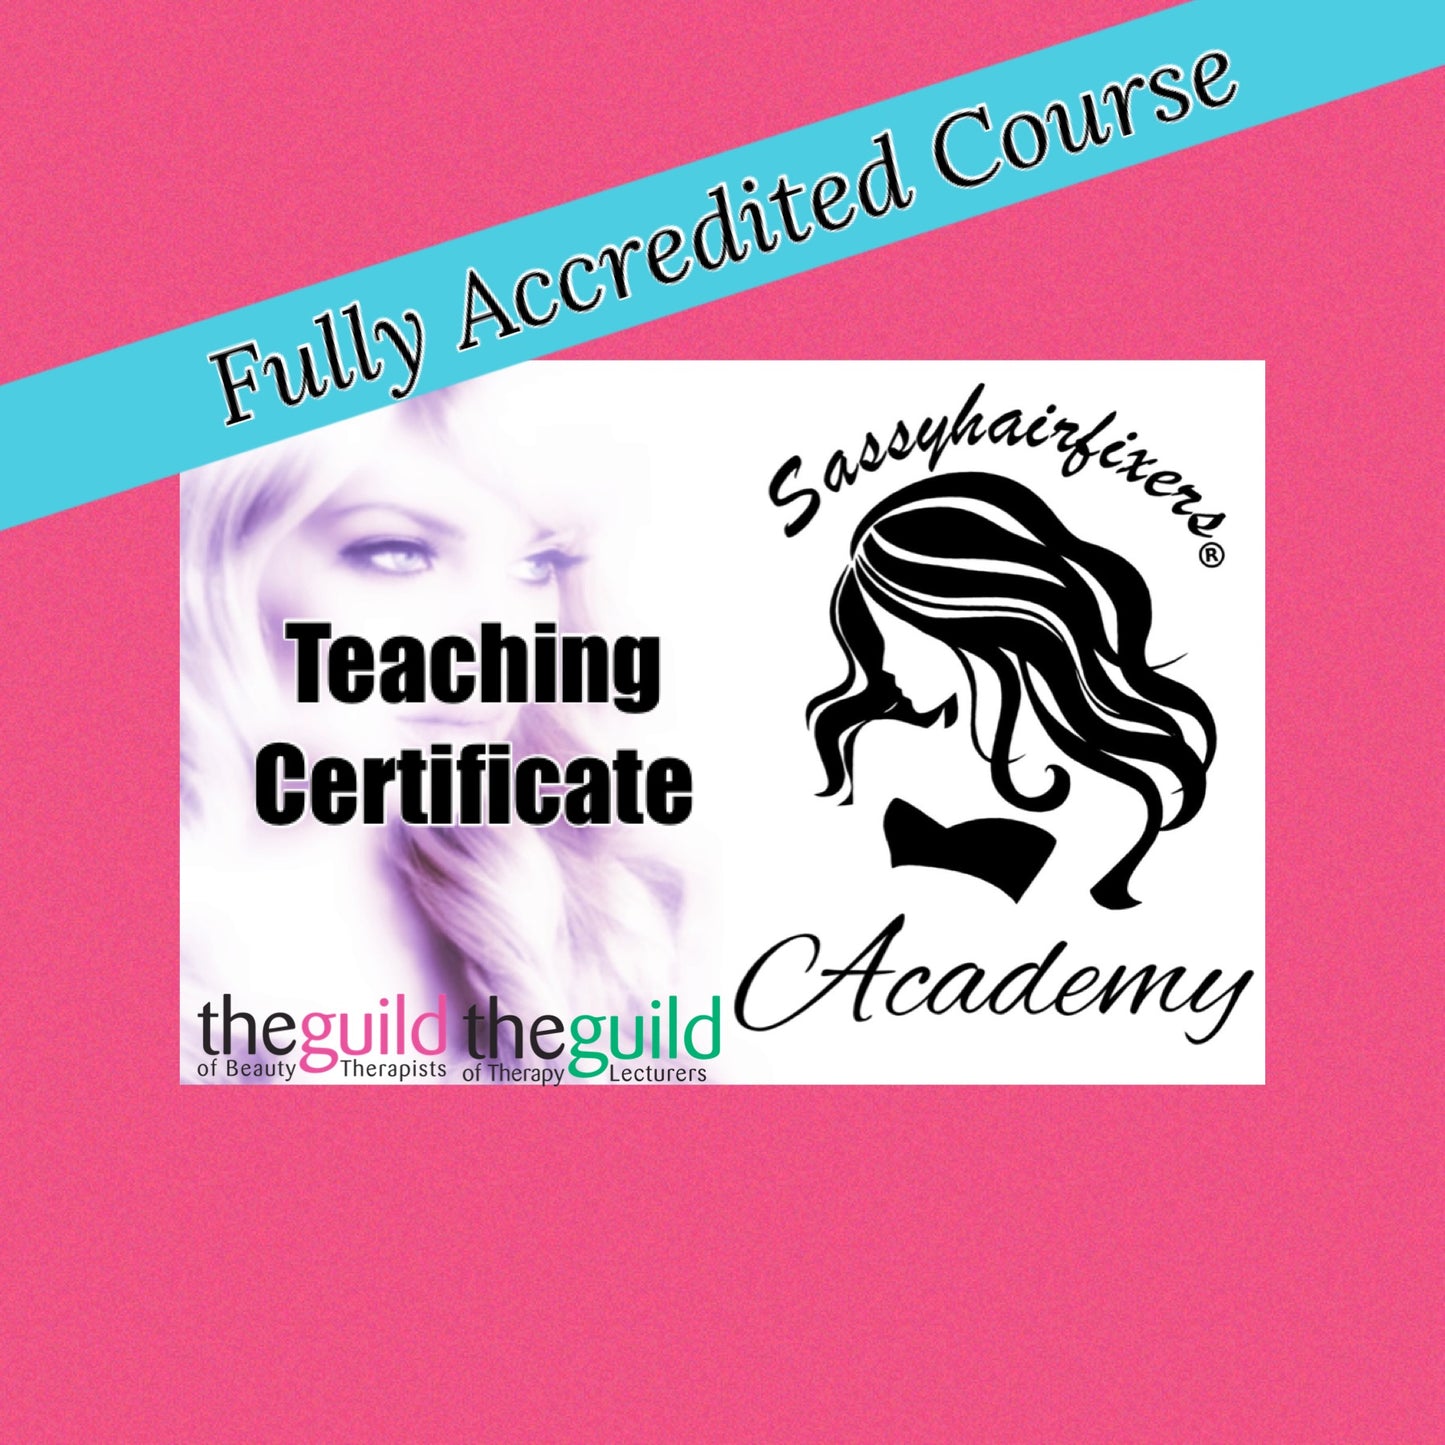 Teaching certificate full accreditation